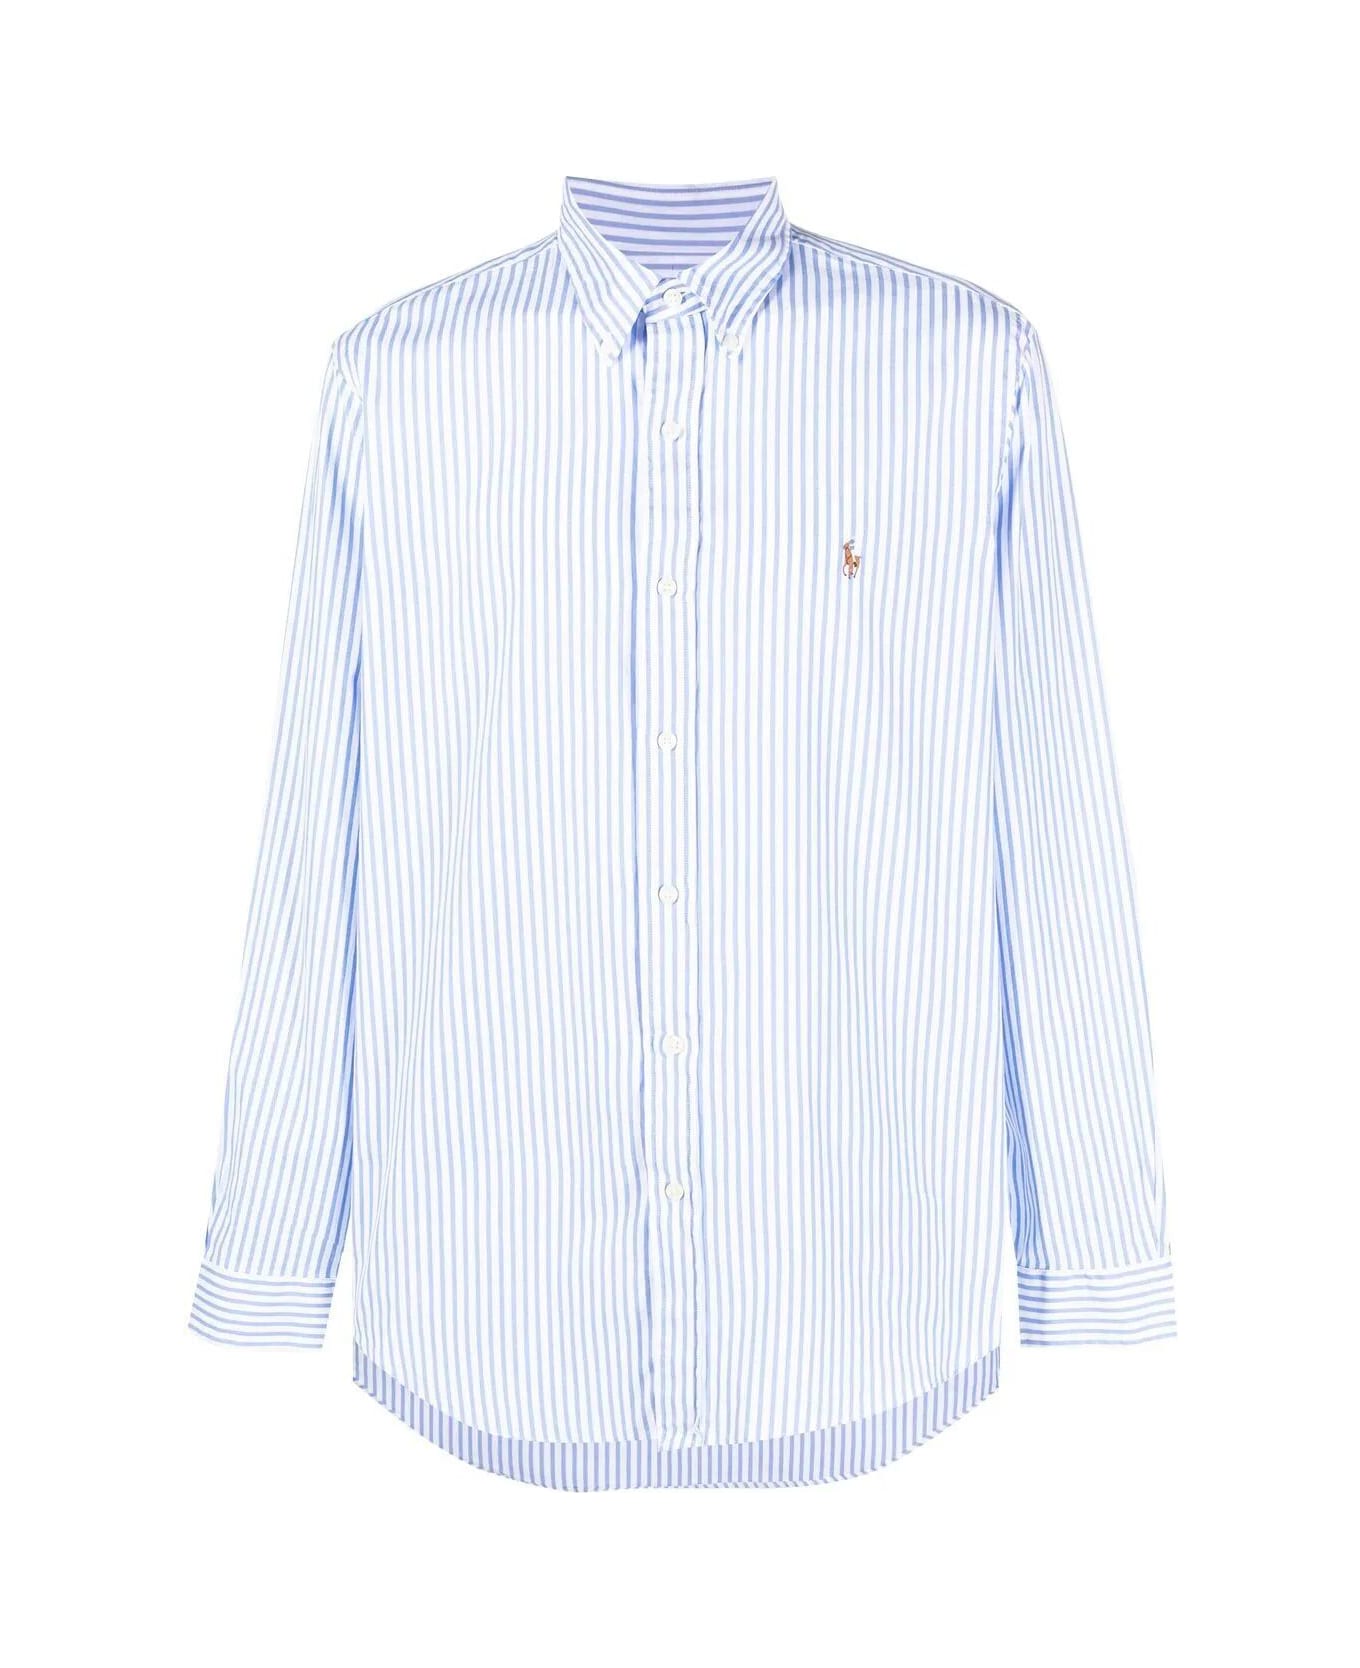 Polo Ralph Lauren Stretch Oxford Long Sleeve Sport Shirt - A Blue White